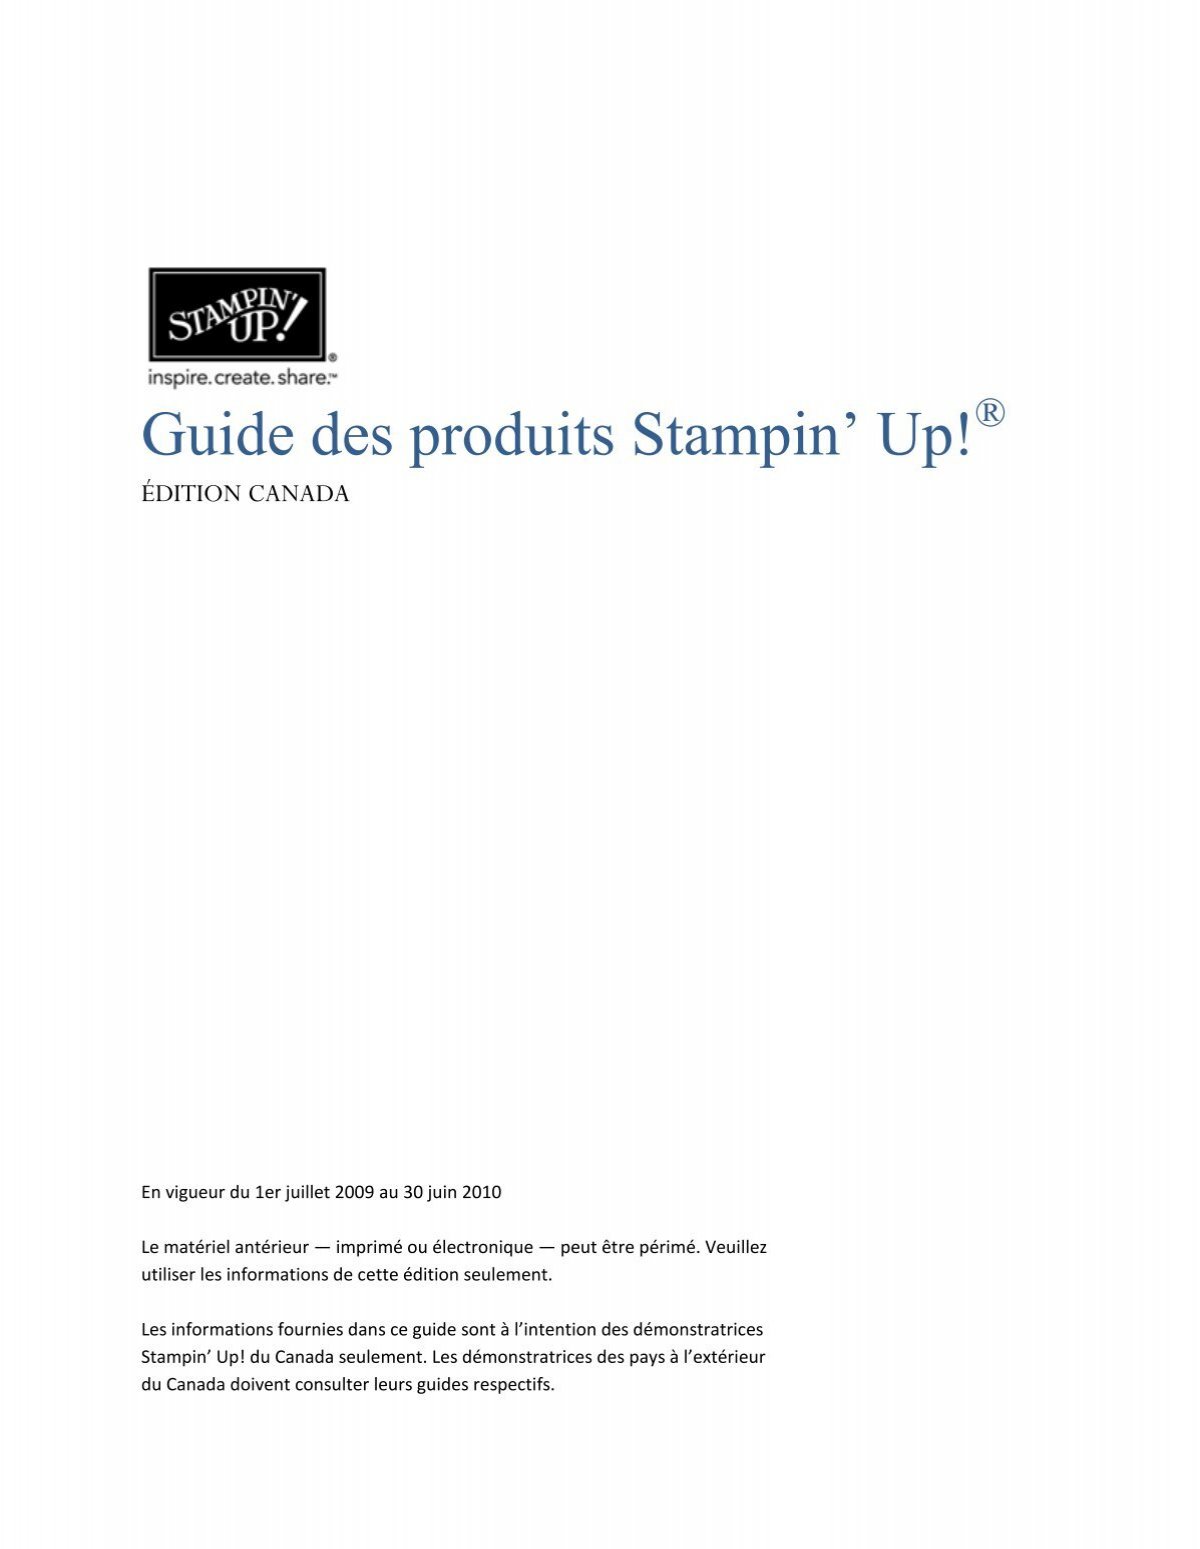 Guide des produits Stampin' Up!®